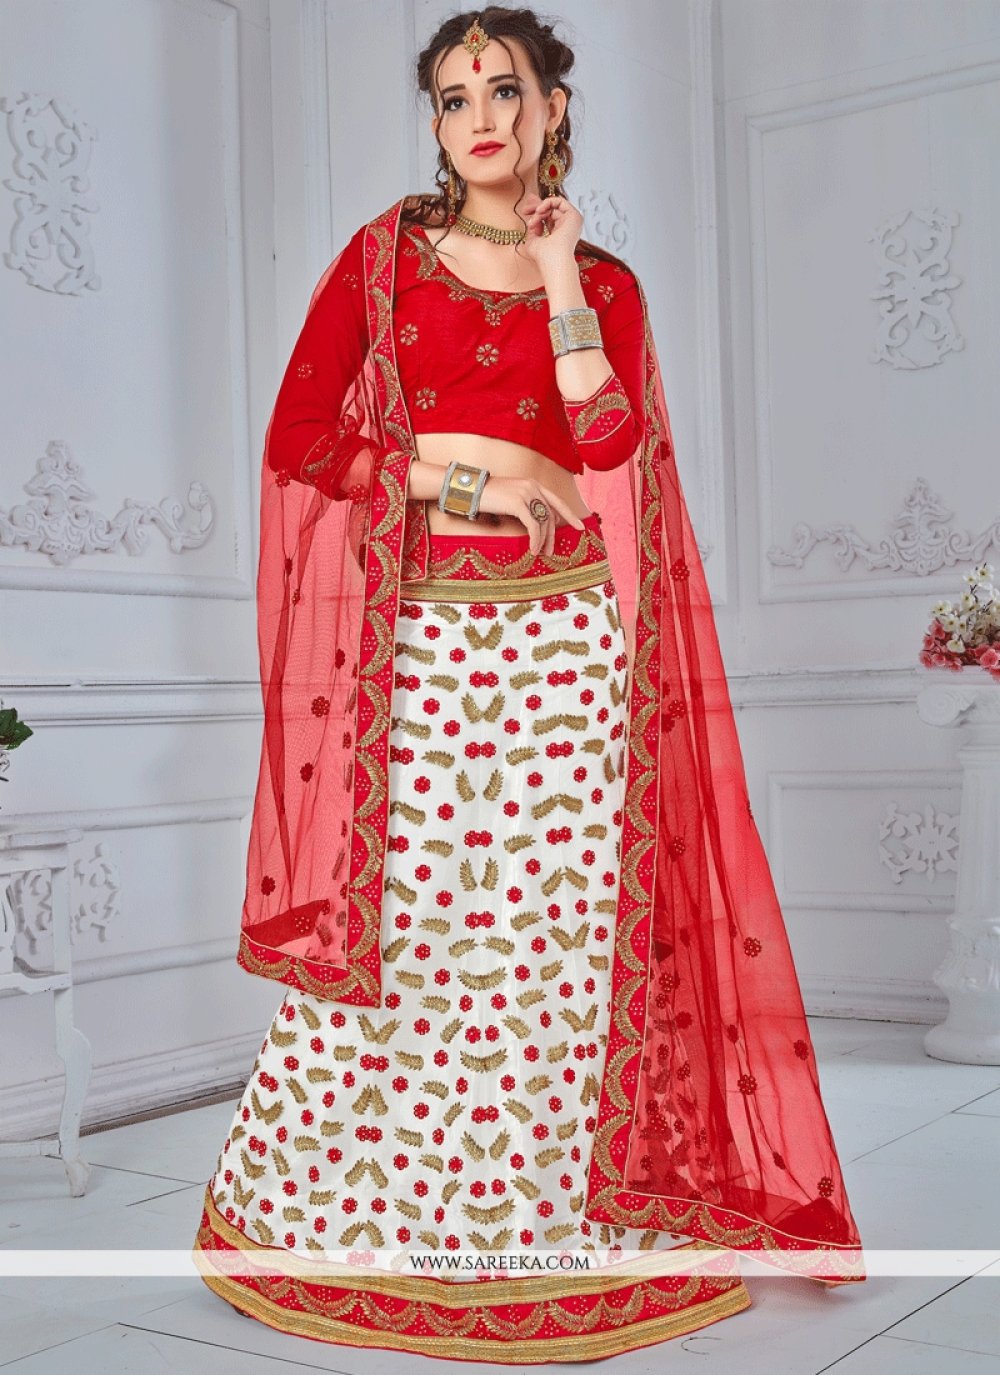 Stylish Digital Print White Color Lehenga Choli With Red Dupatta –  bollywoodlehenga